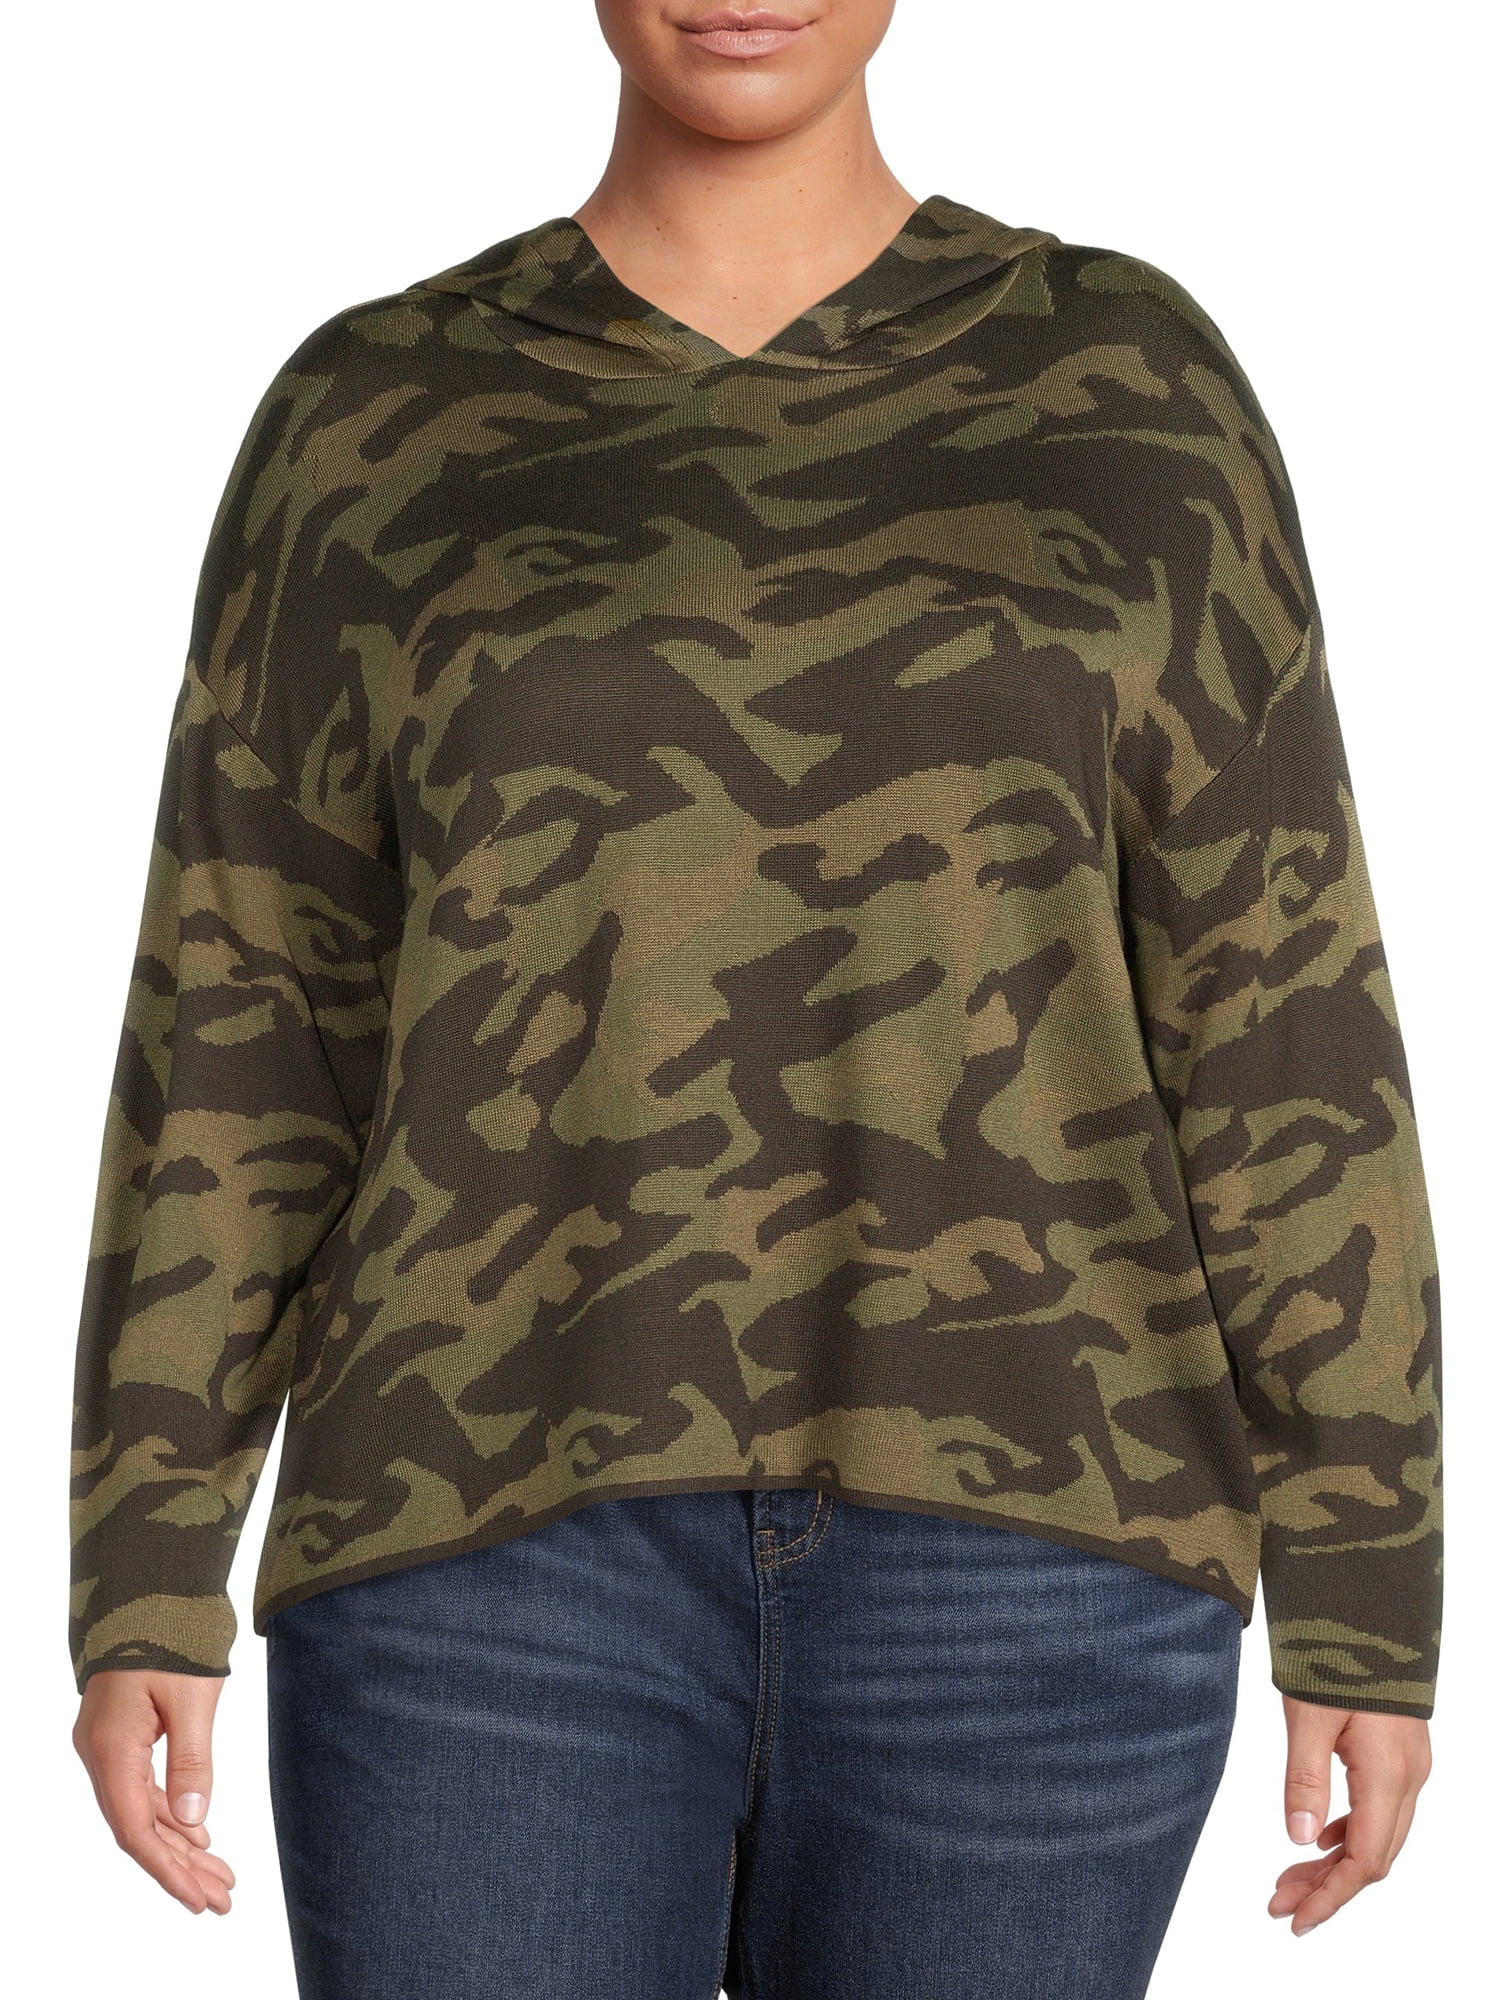 Terra & Sky Women's Plus Size Jacquard Hoodie Sweater - Walmart.com